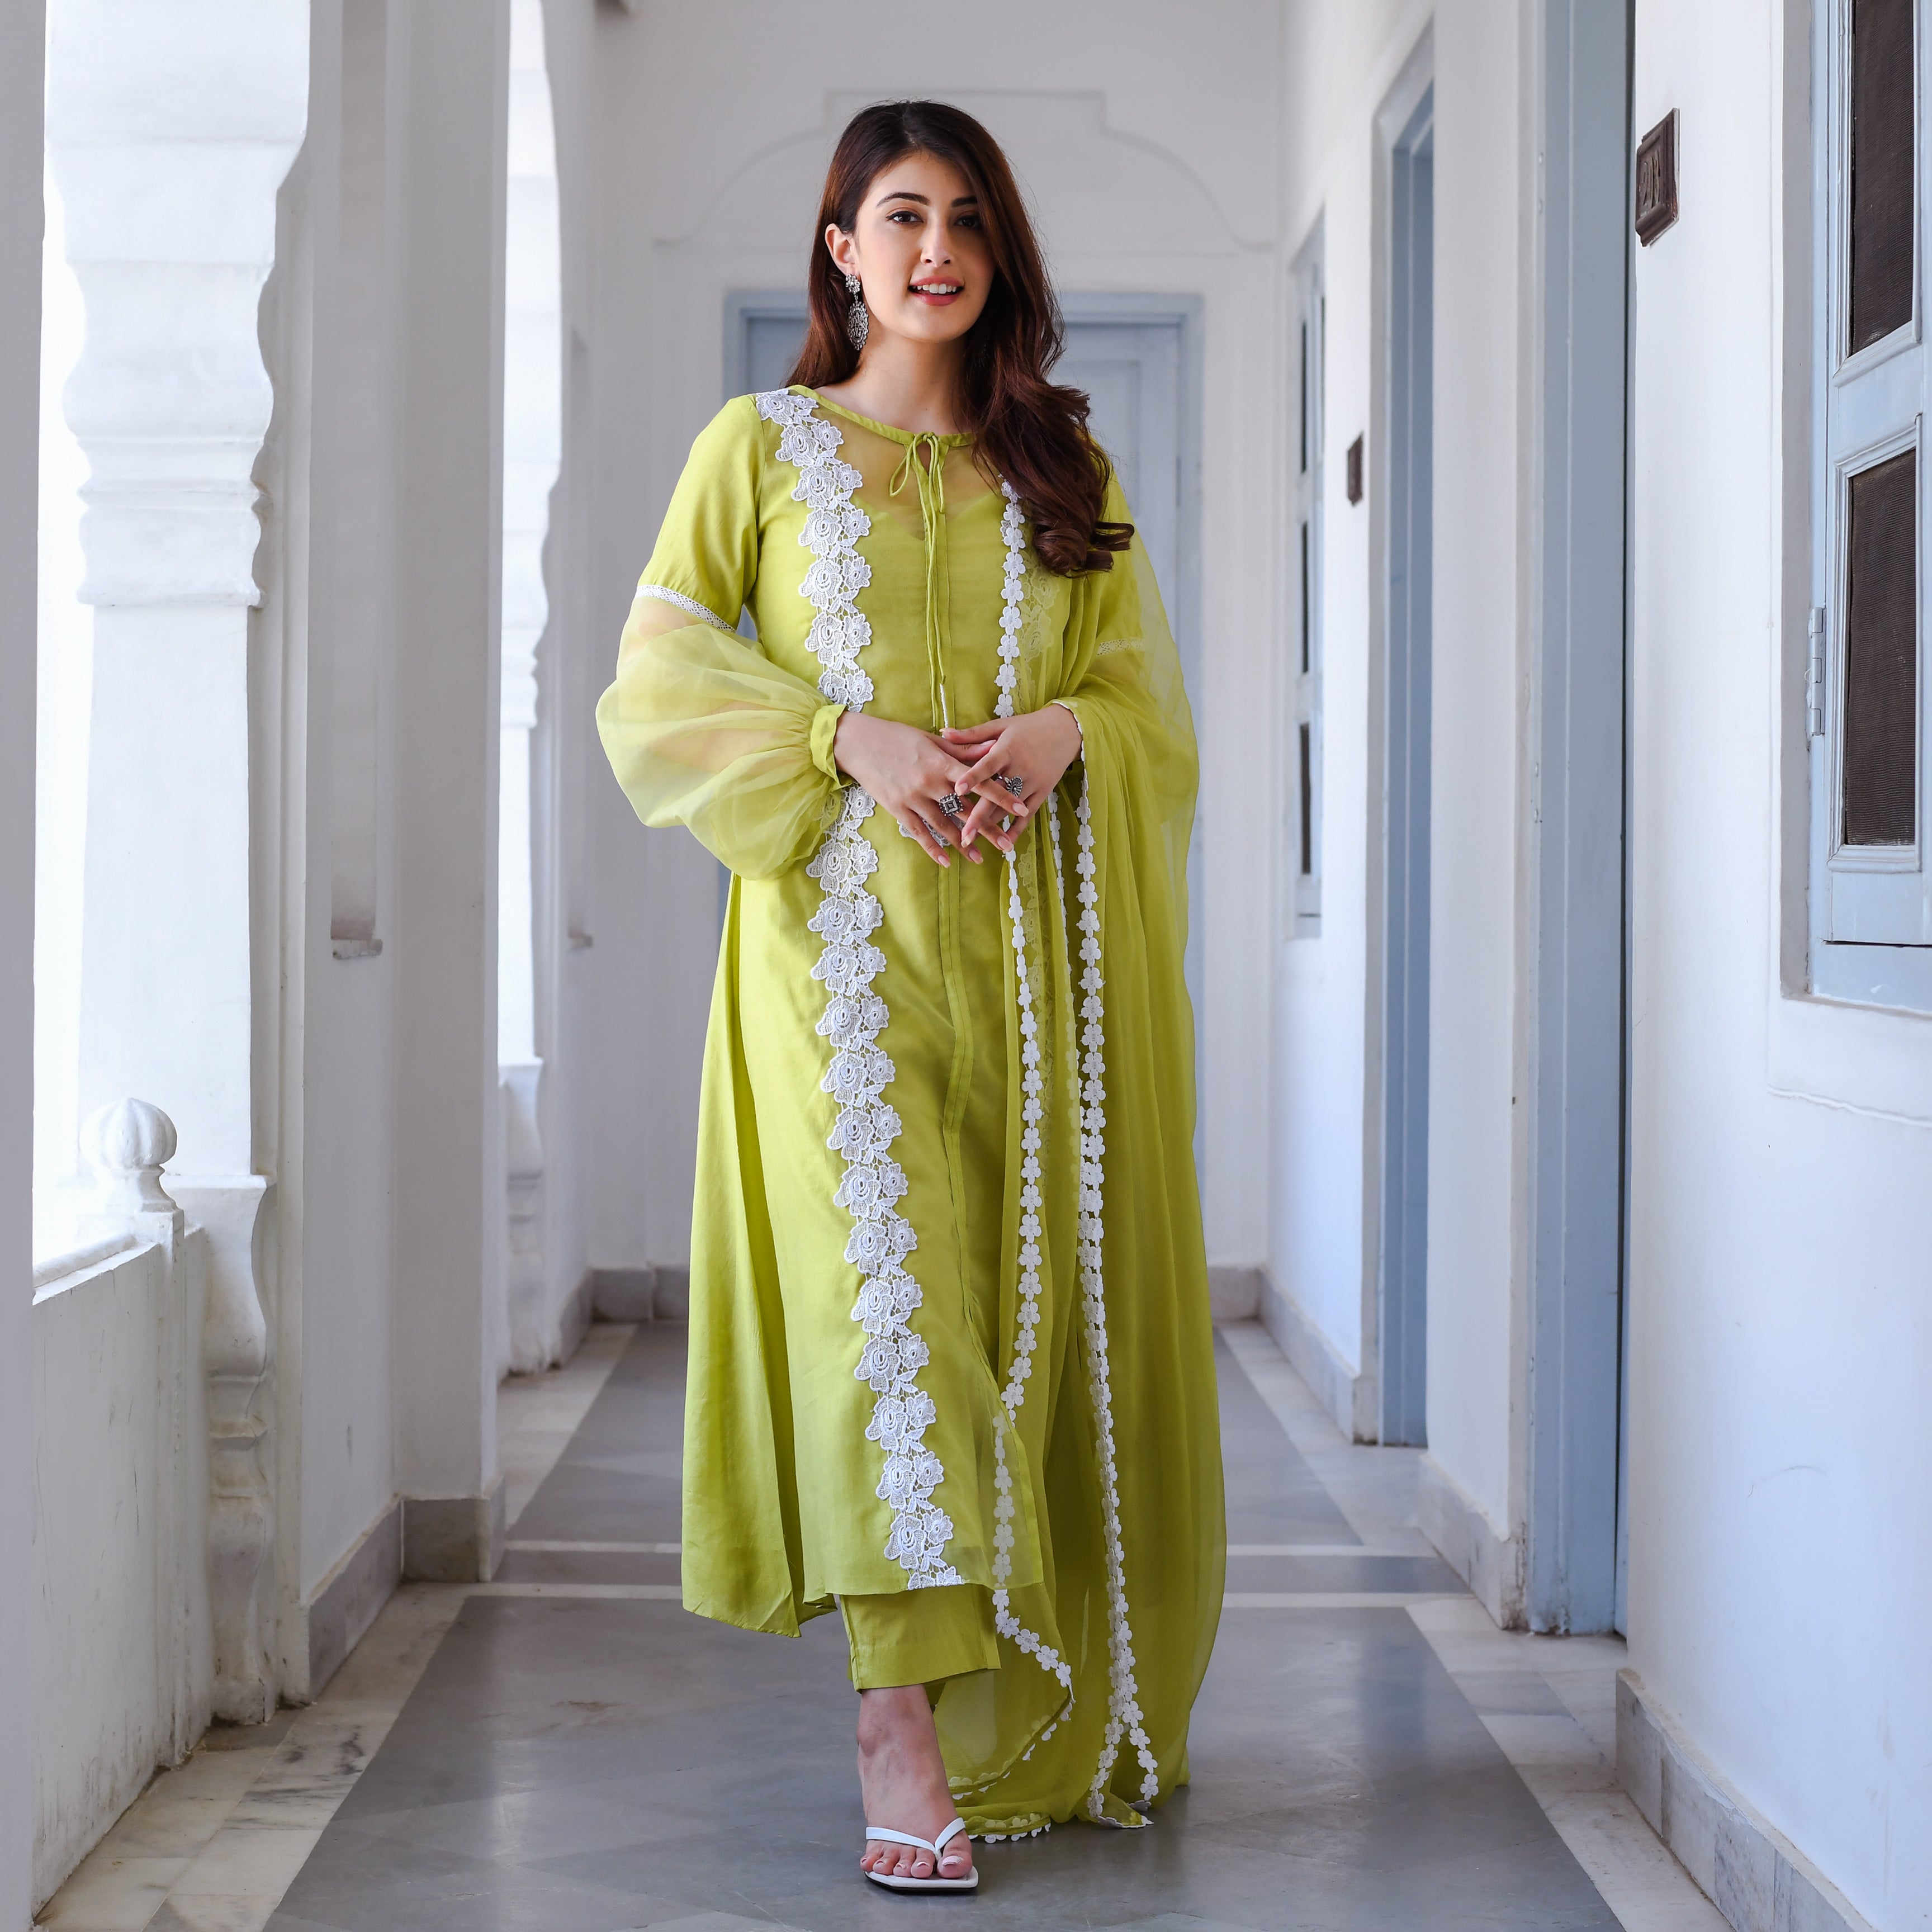  Kirshi Green Ethnic Wear Designer Traditional Suit Set For Women Online